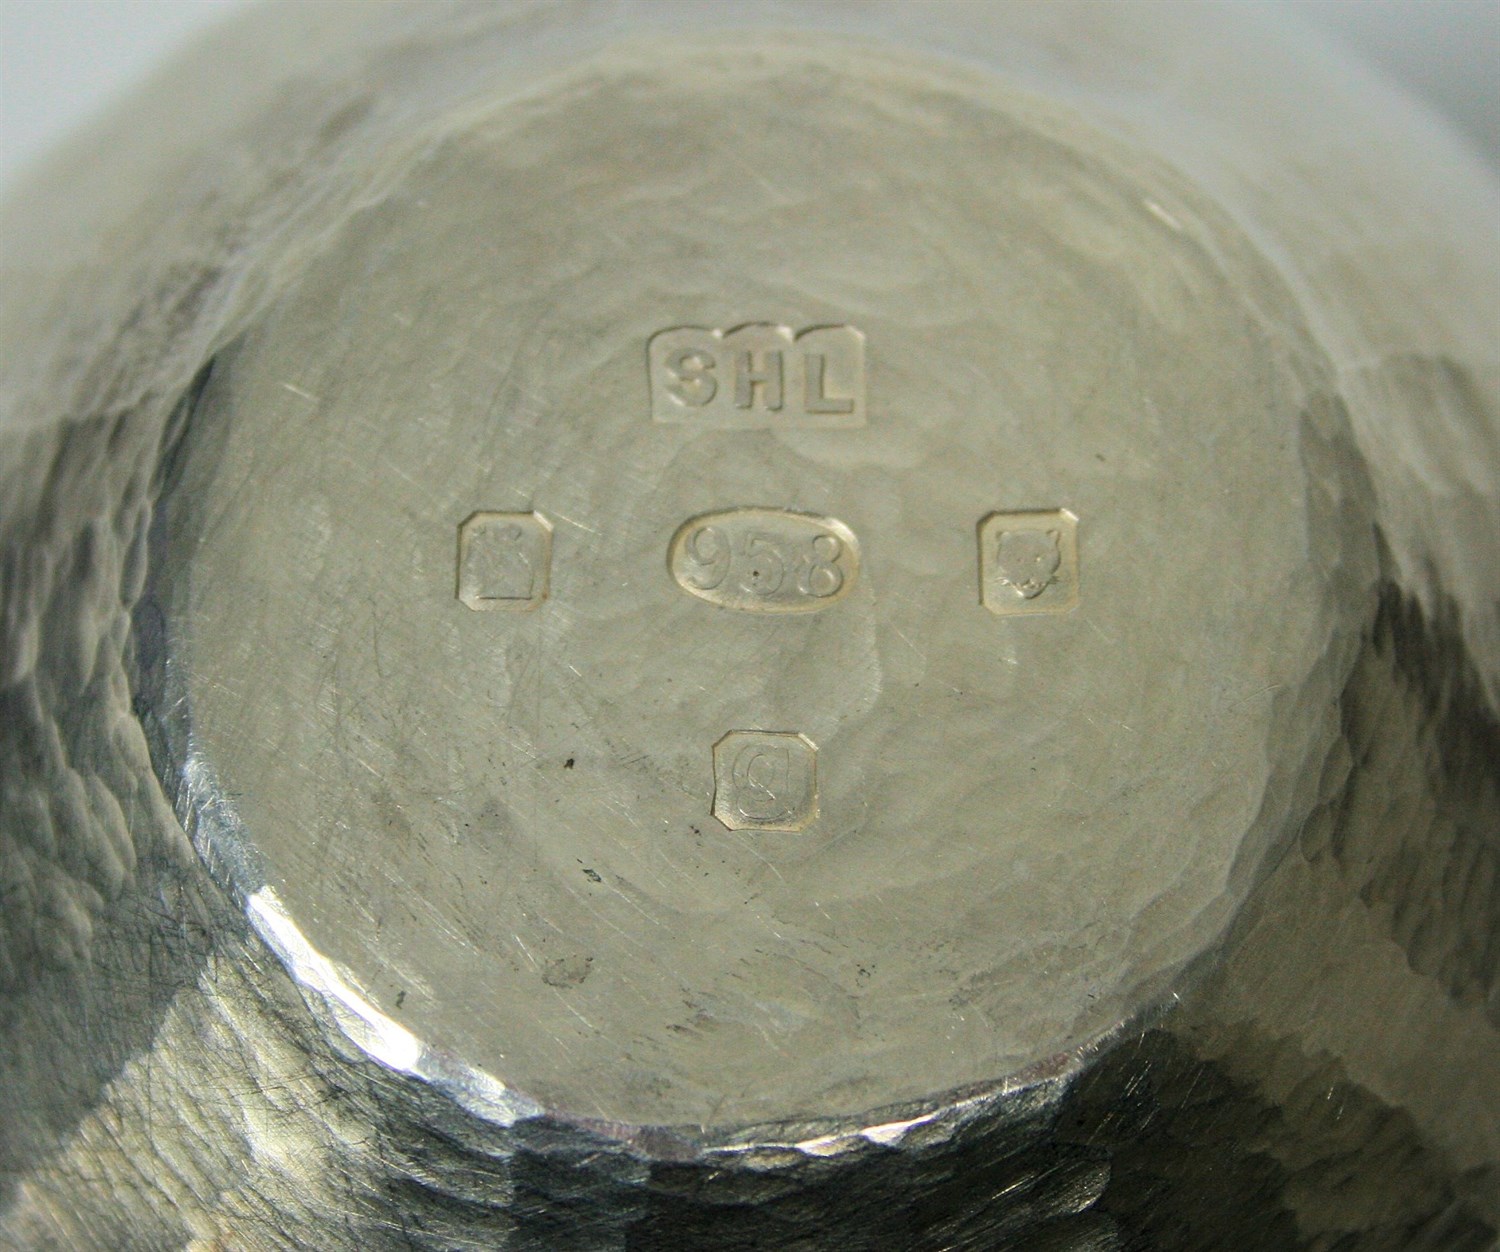 Lot 5 - SANG-HYEOB 'WILLIAM LEE' - A contemporary Britannia standard silver beaker